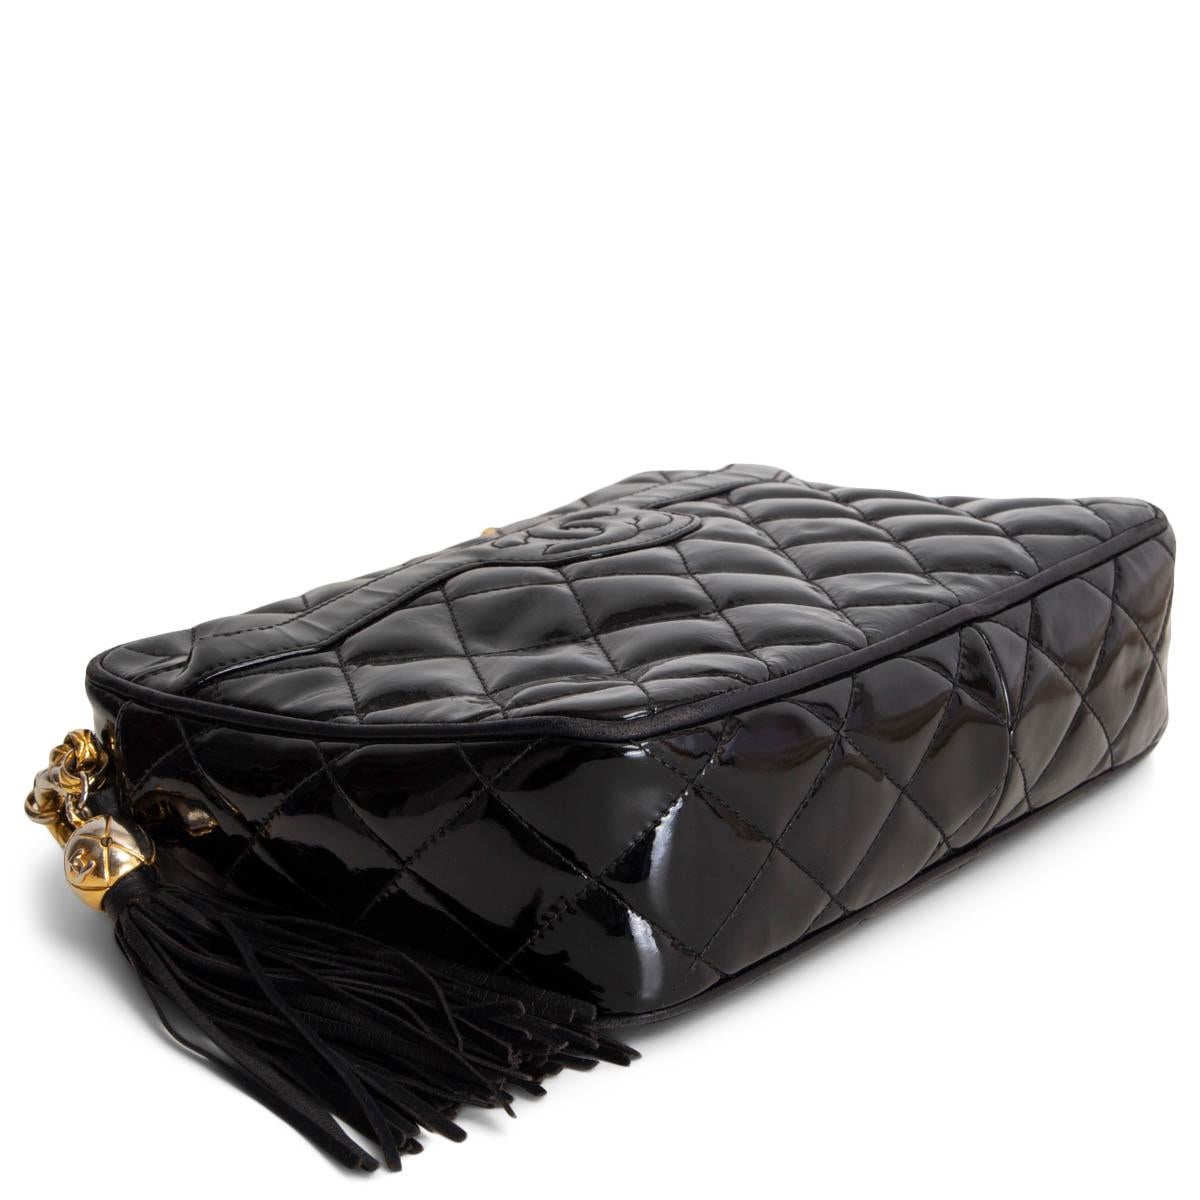 Women's CHANEL black quilted patent leather TASSEL CAMERA Shoulder Bag